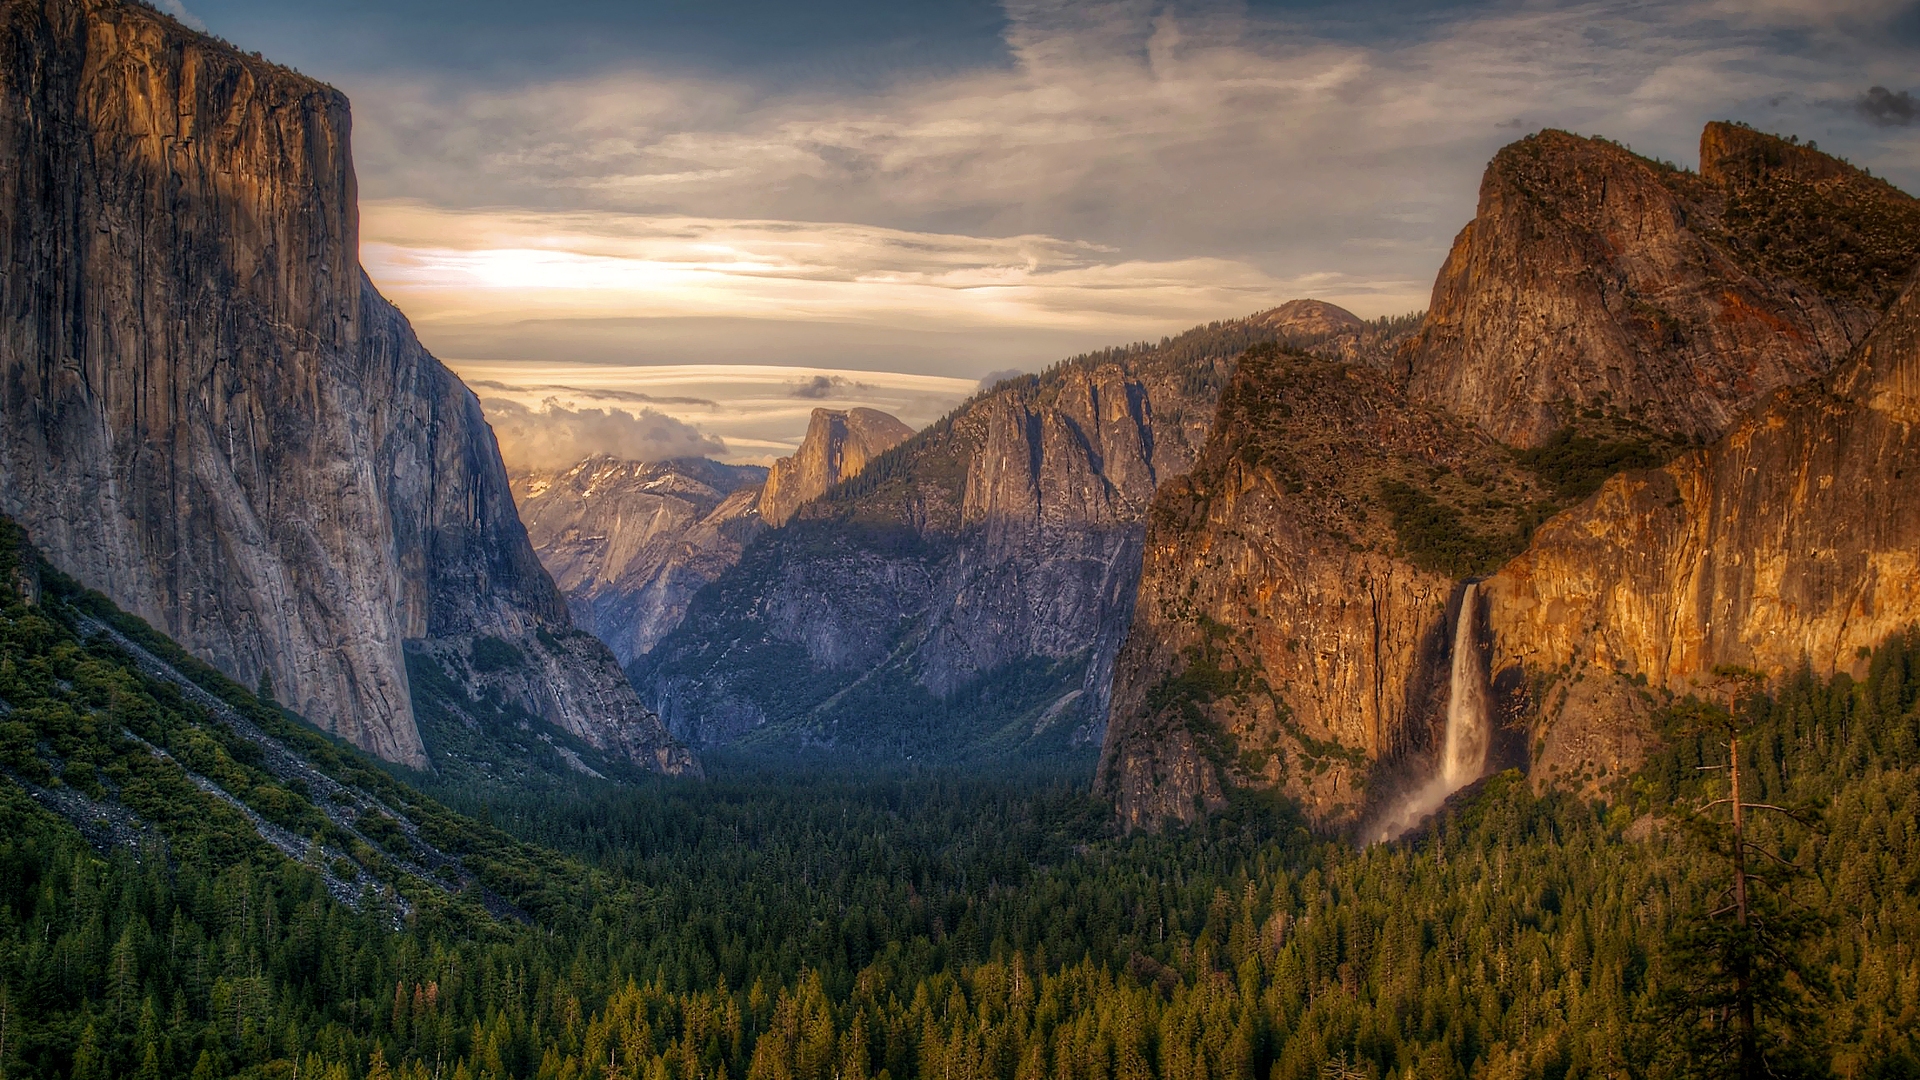 Yosemite National Park Landscape for 1920 x 1080 HDTV 1080p resolution